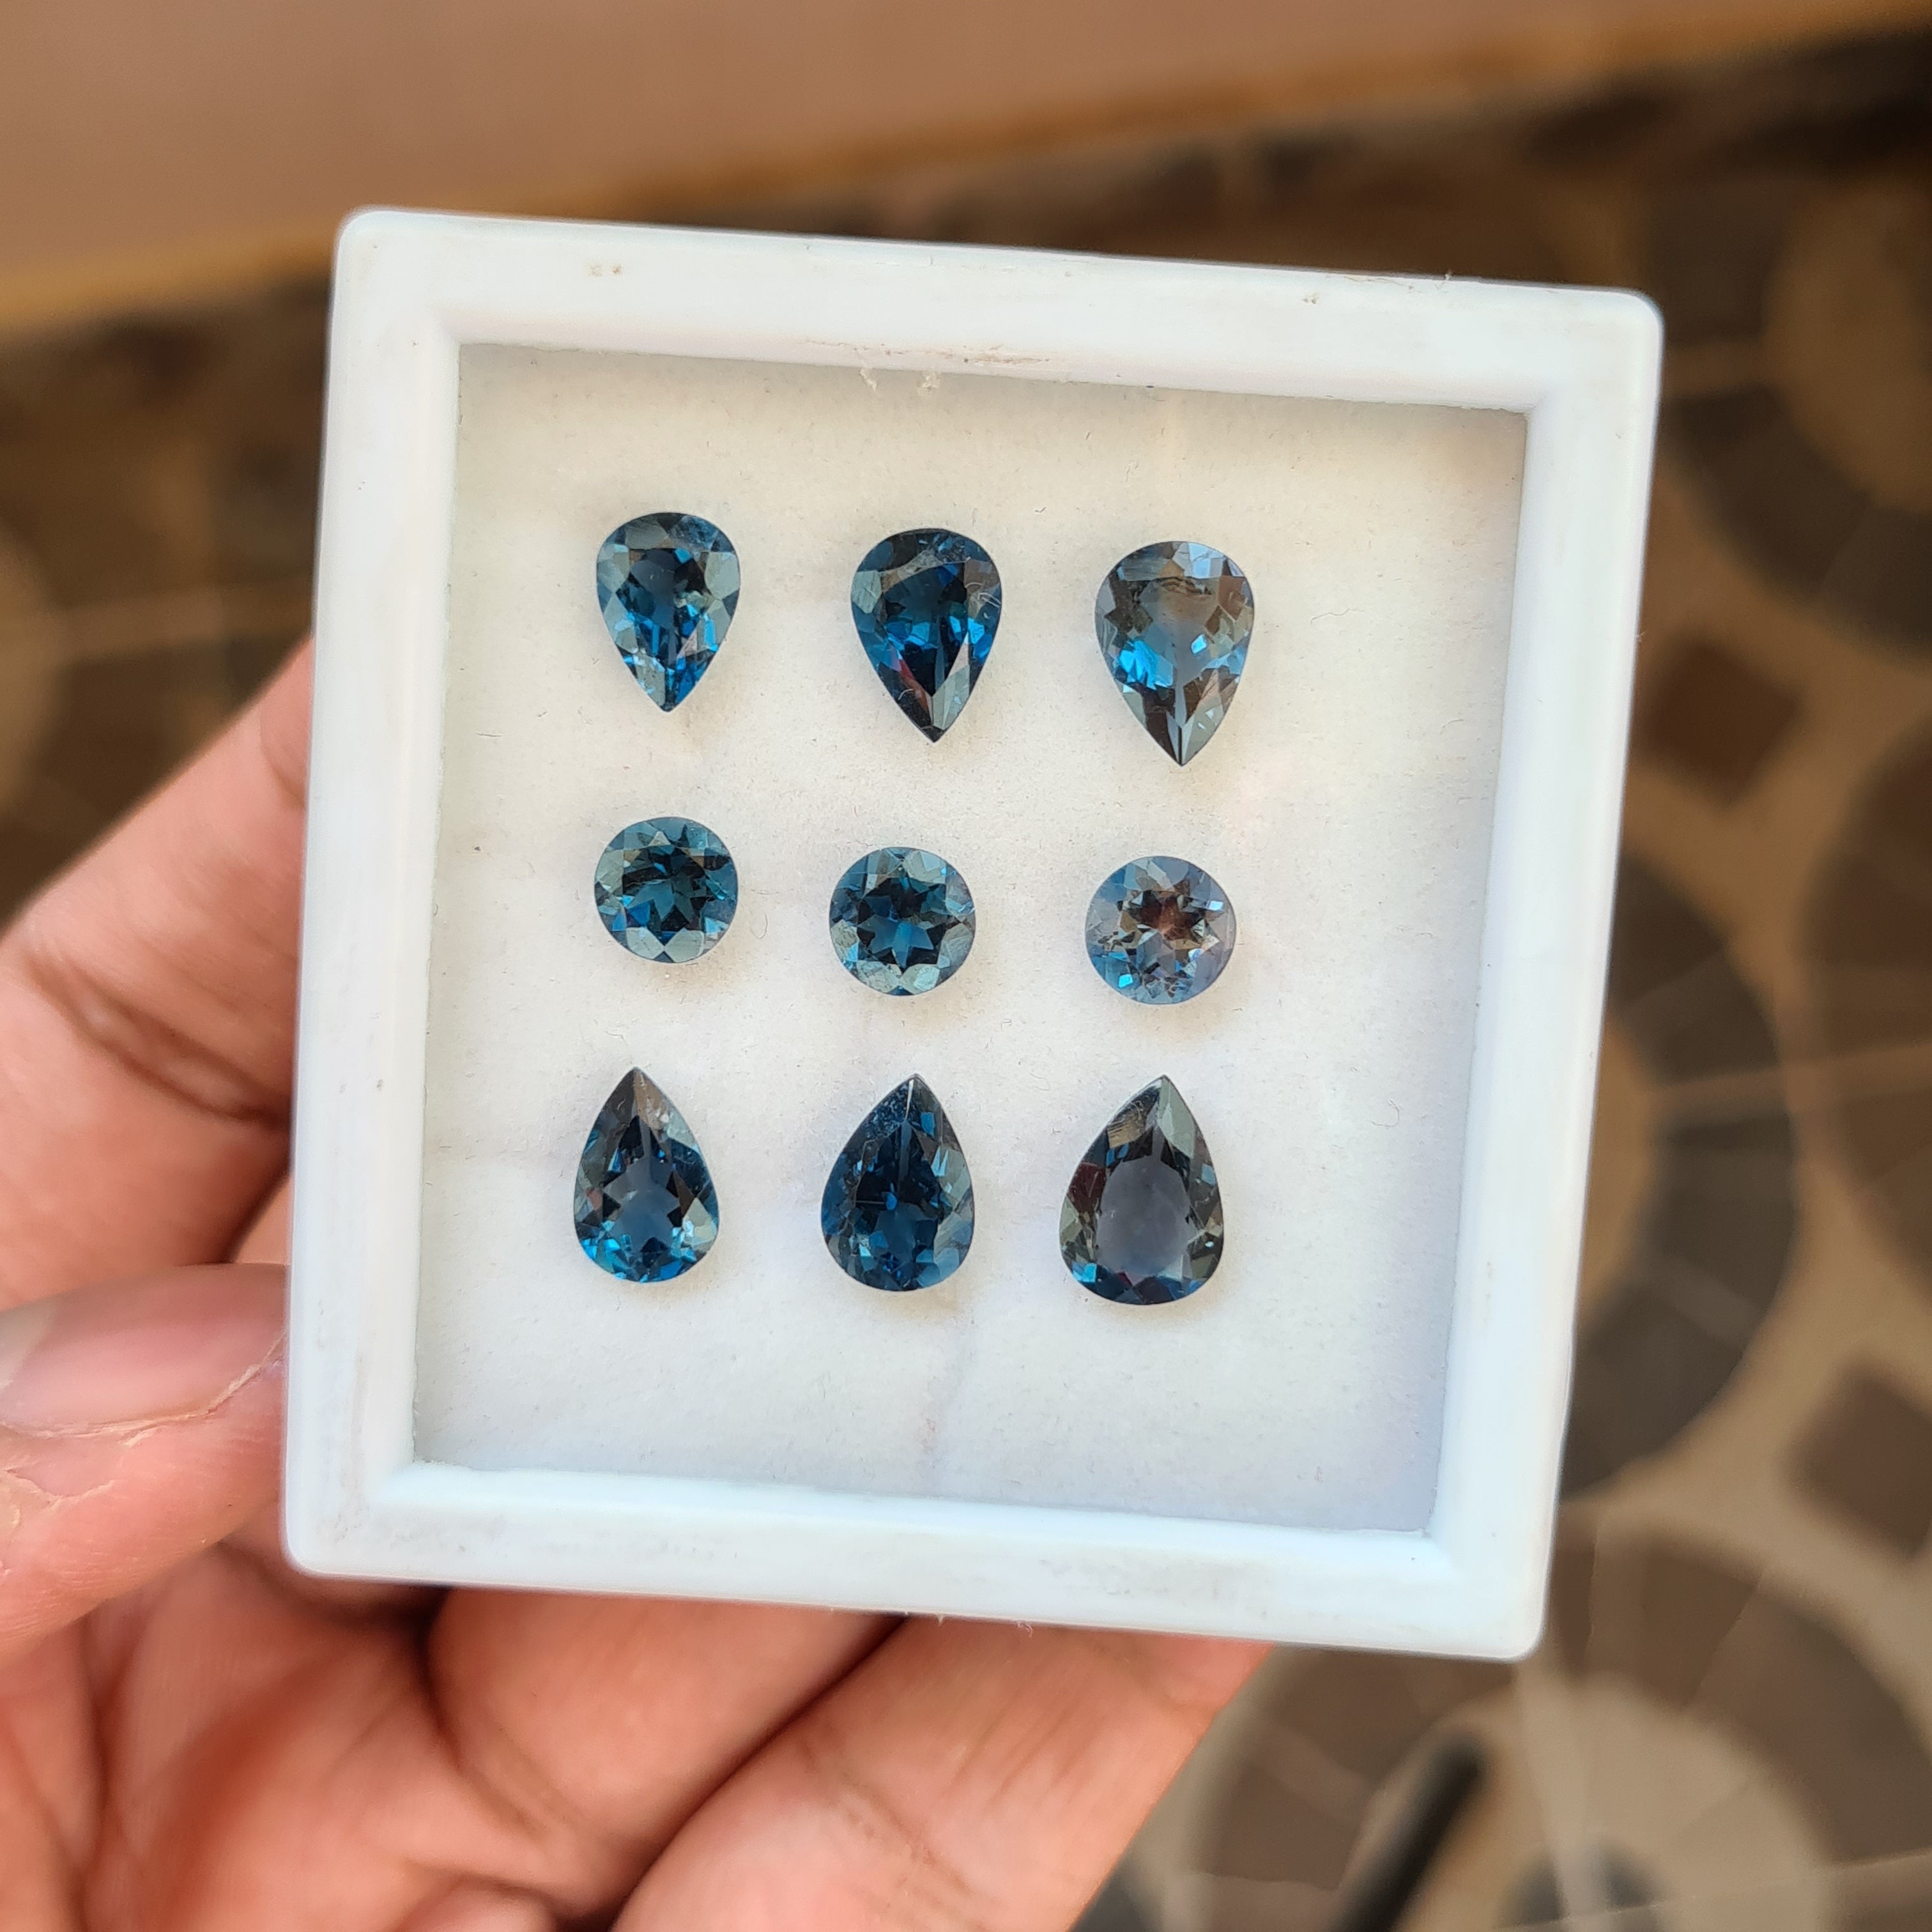 9 Pcs Natural London Blue Topaz Faceted Gemstone Mix Shape Size: 7-10mm - The LabradoriteKing